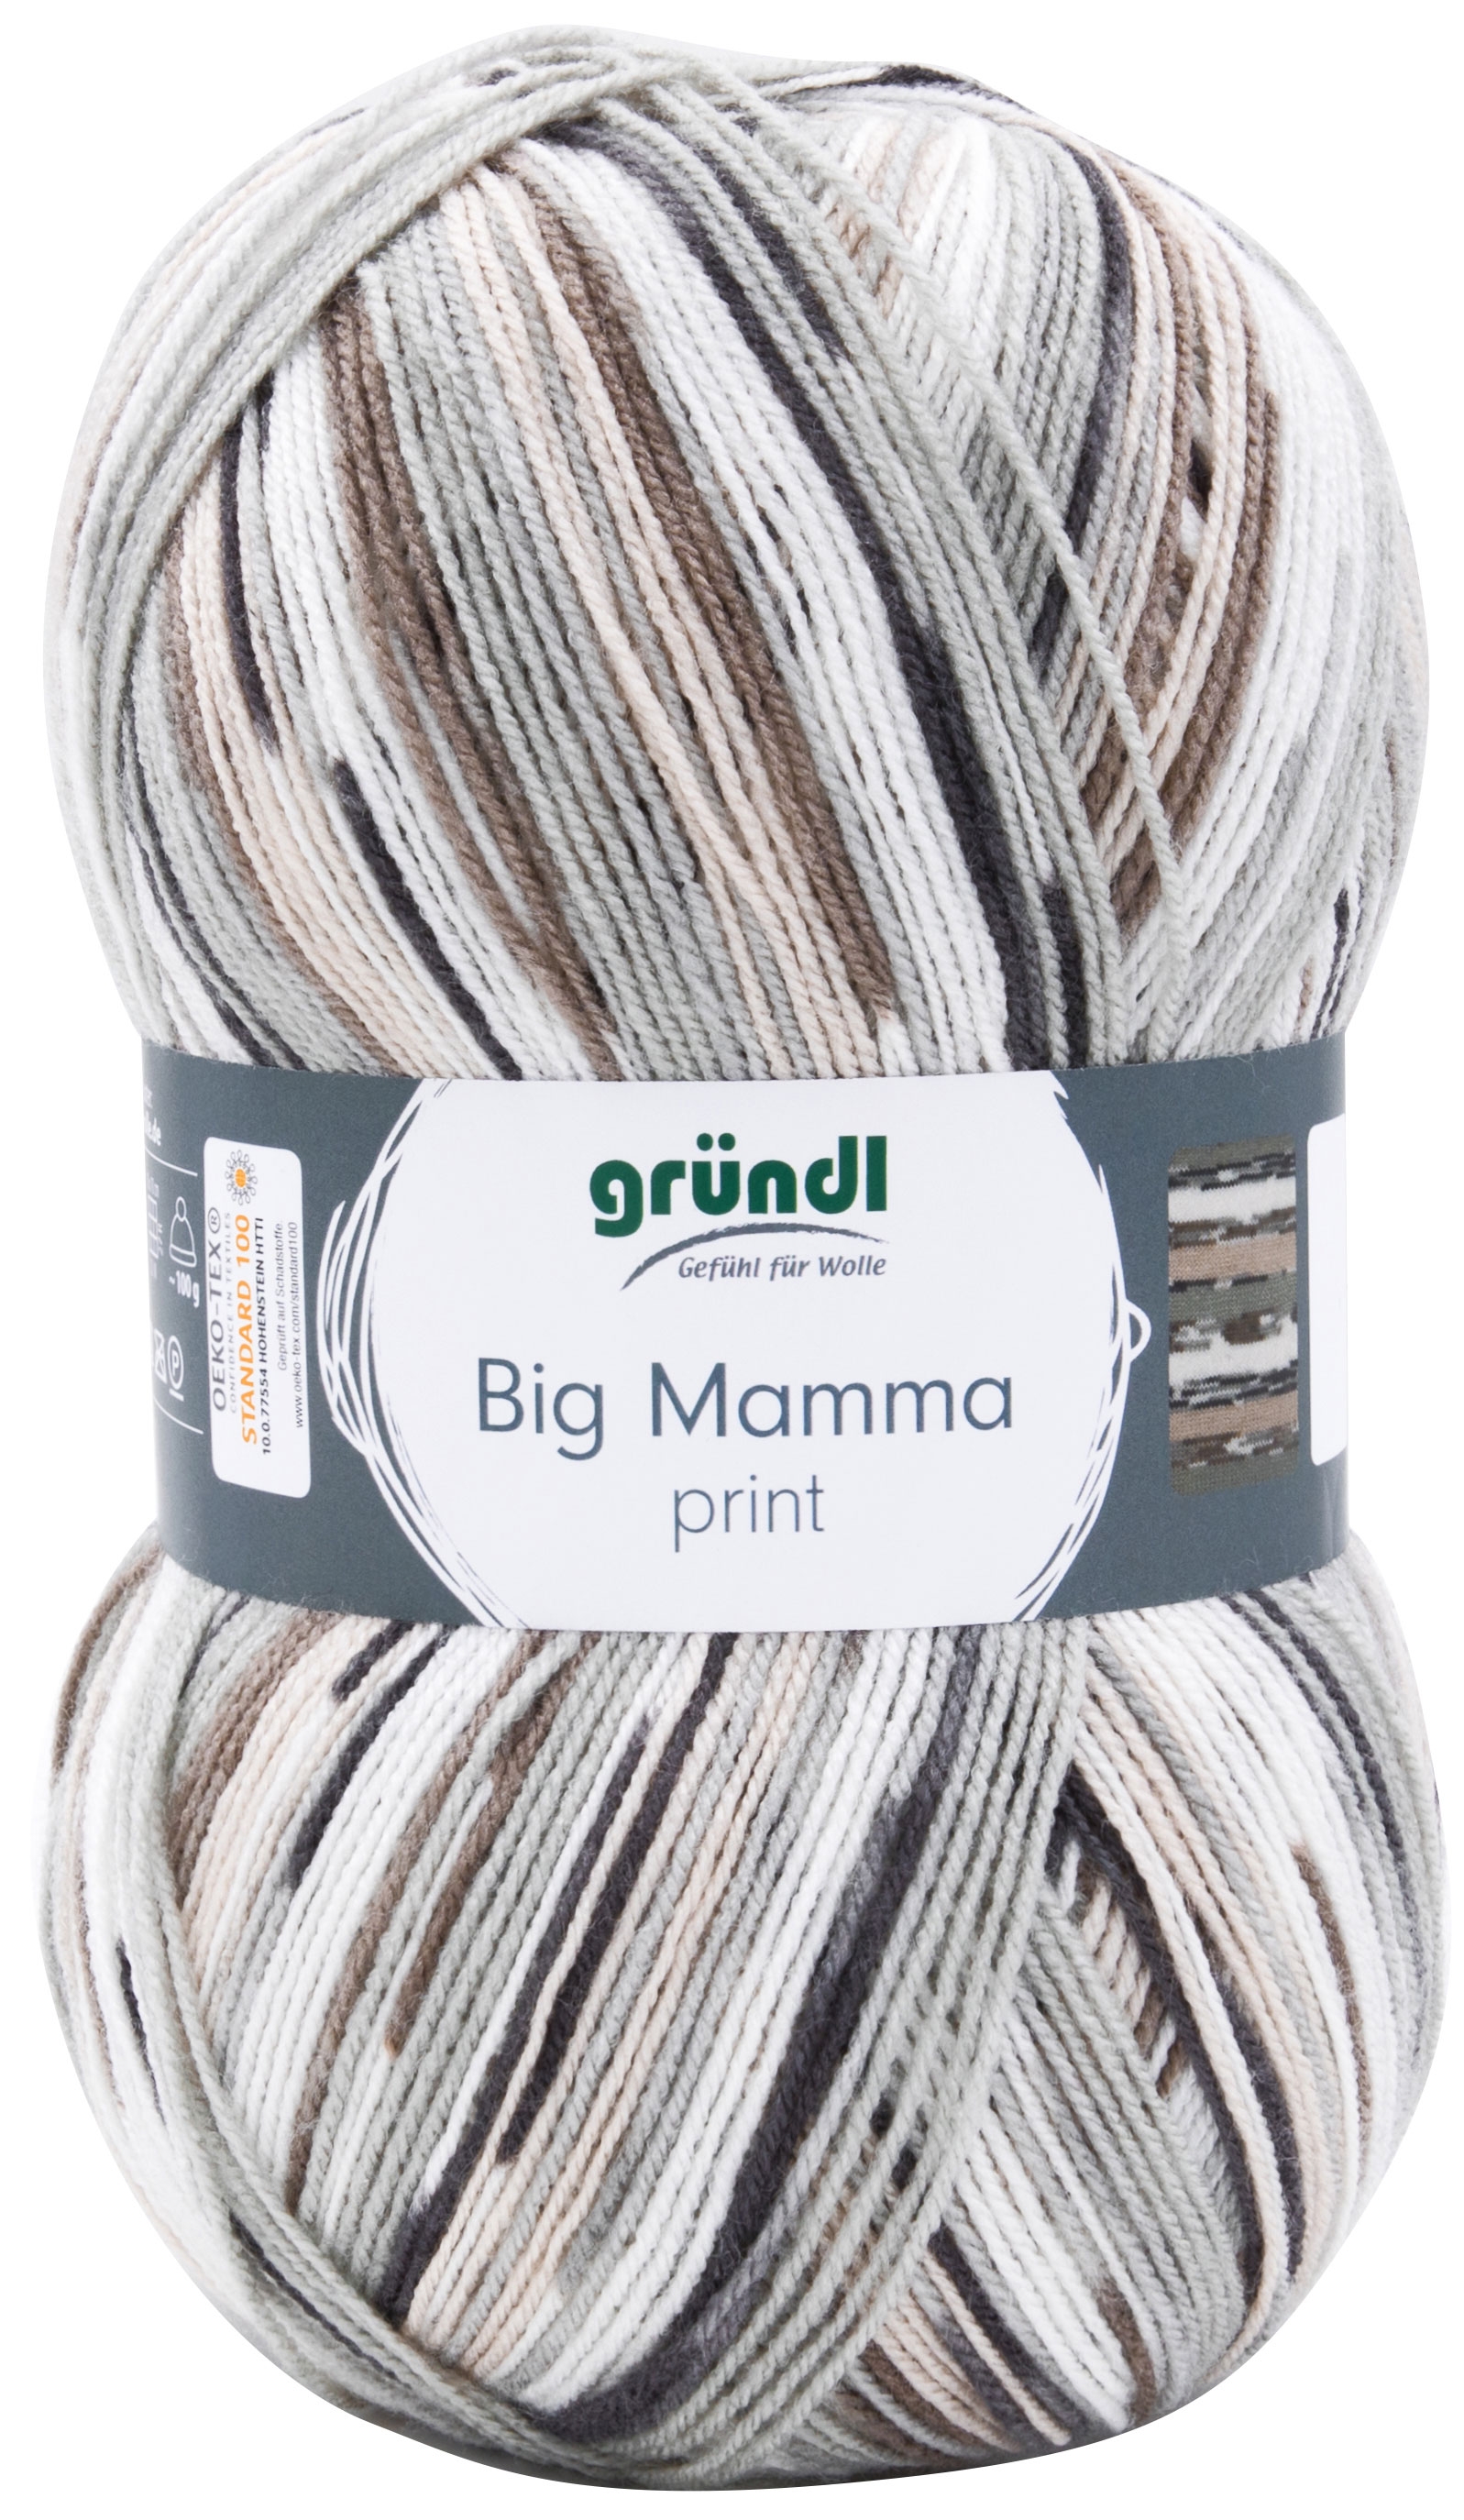 GRÜNDL Garn Big Mamma print 400 g weiß/grau/braun